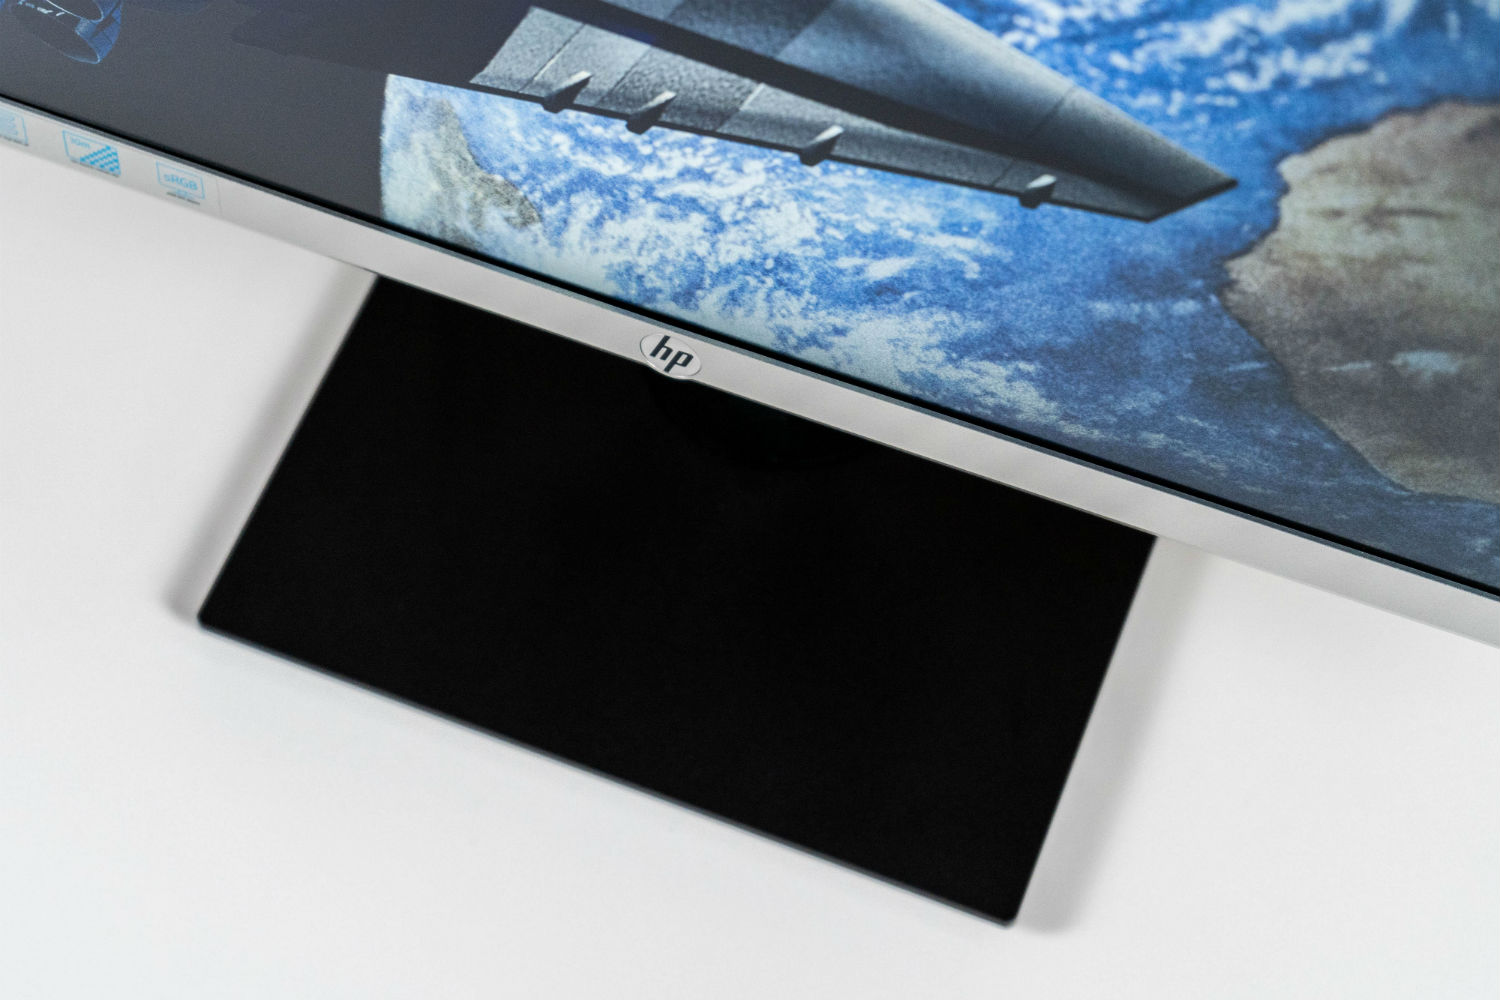 HP 27f 4K Monitor Review: Can $450 Buy a Good 4K Display